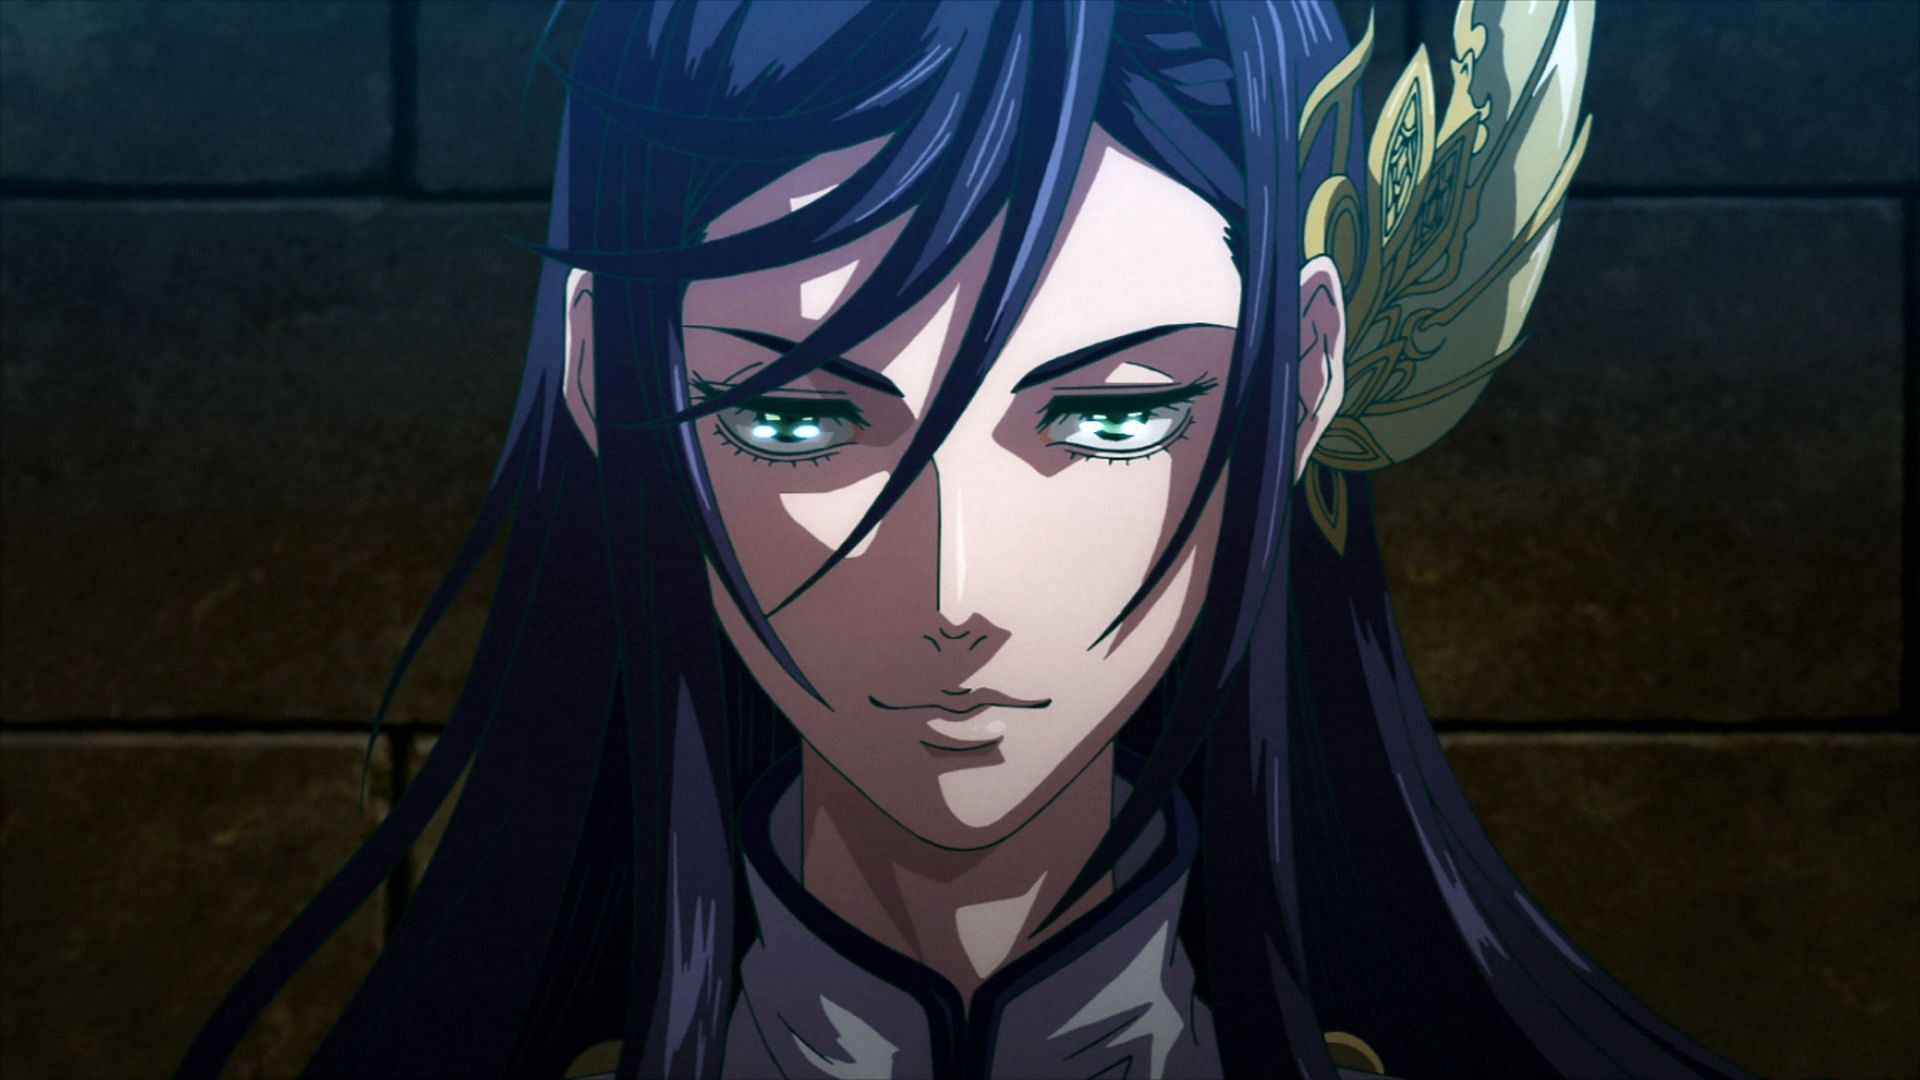 Brunhilde as seen in the anime Record of Ragnarok (Image via Studio Graphinica)